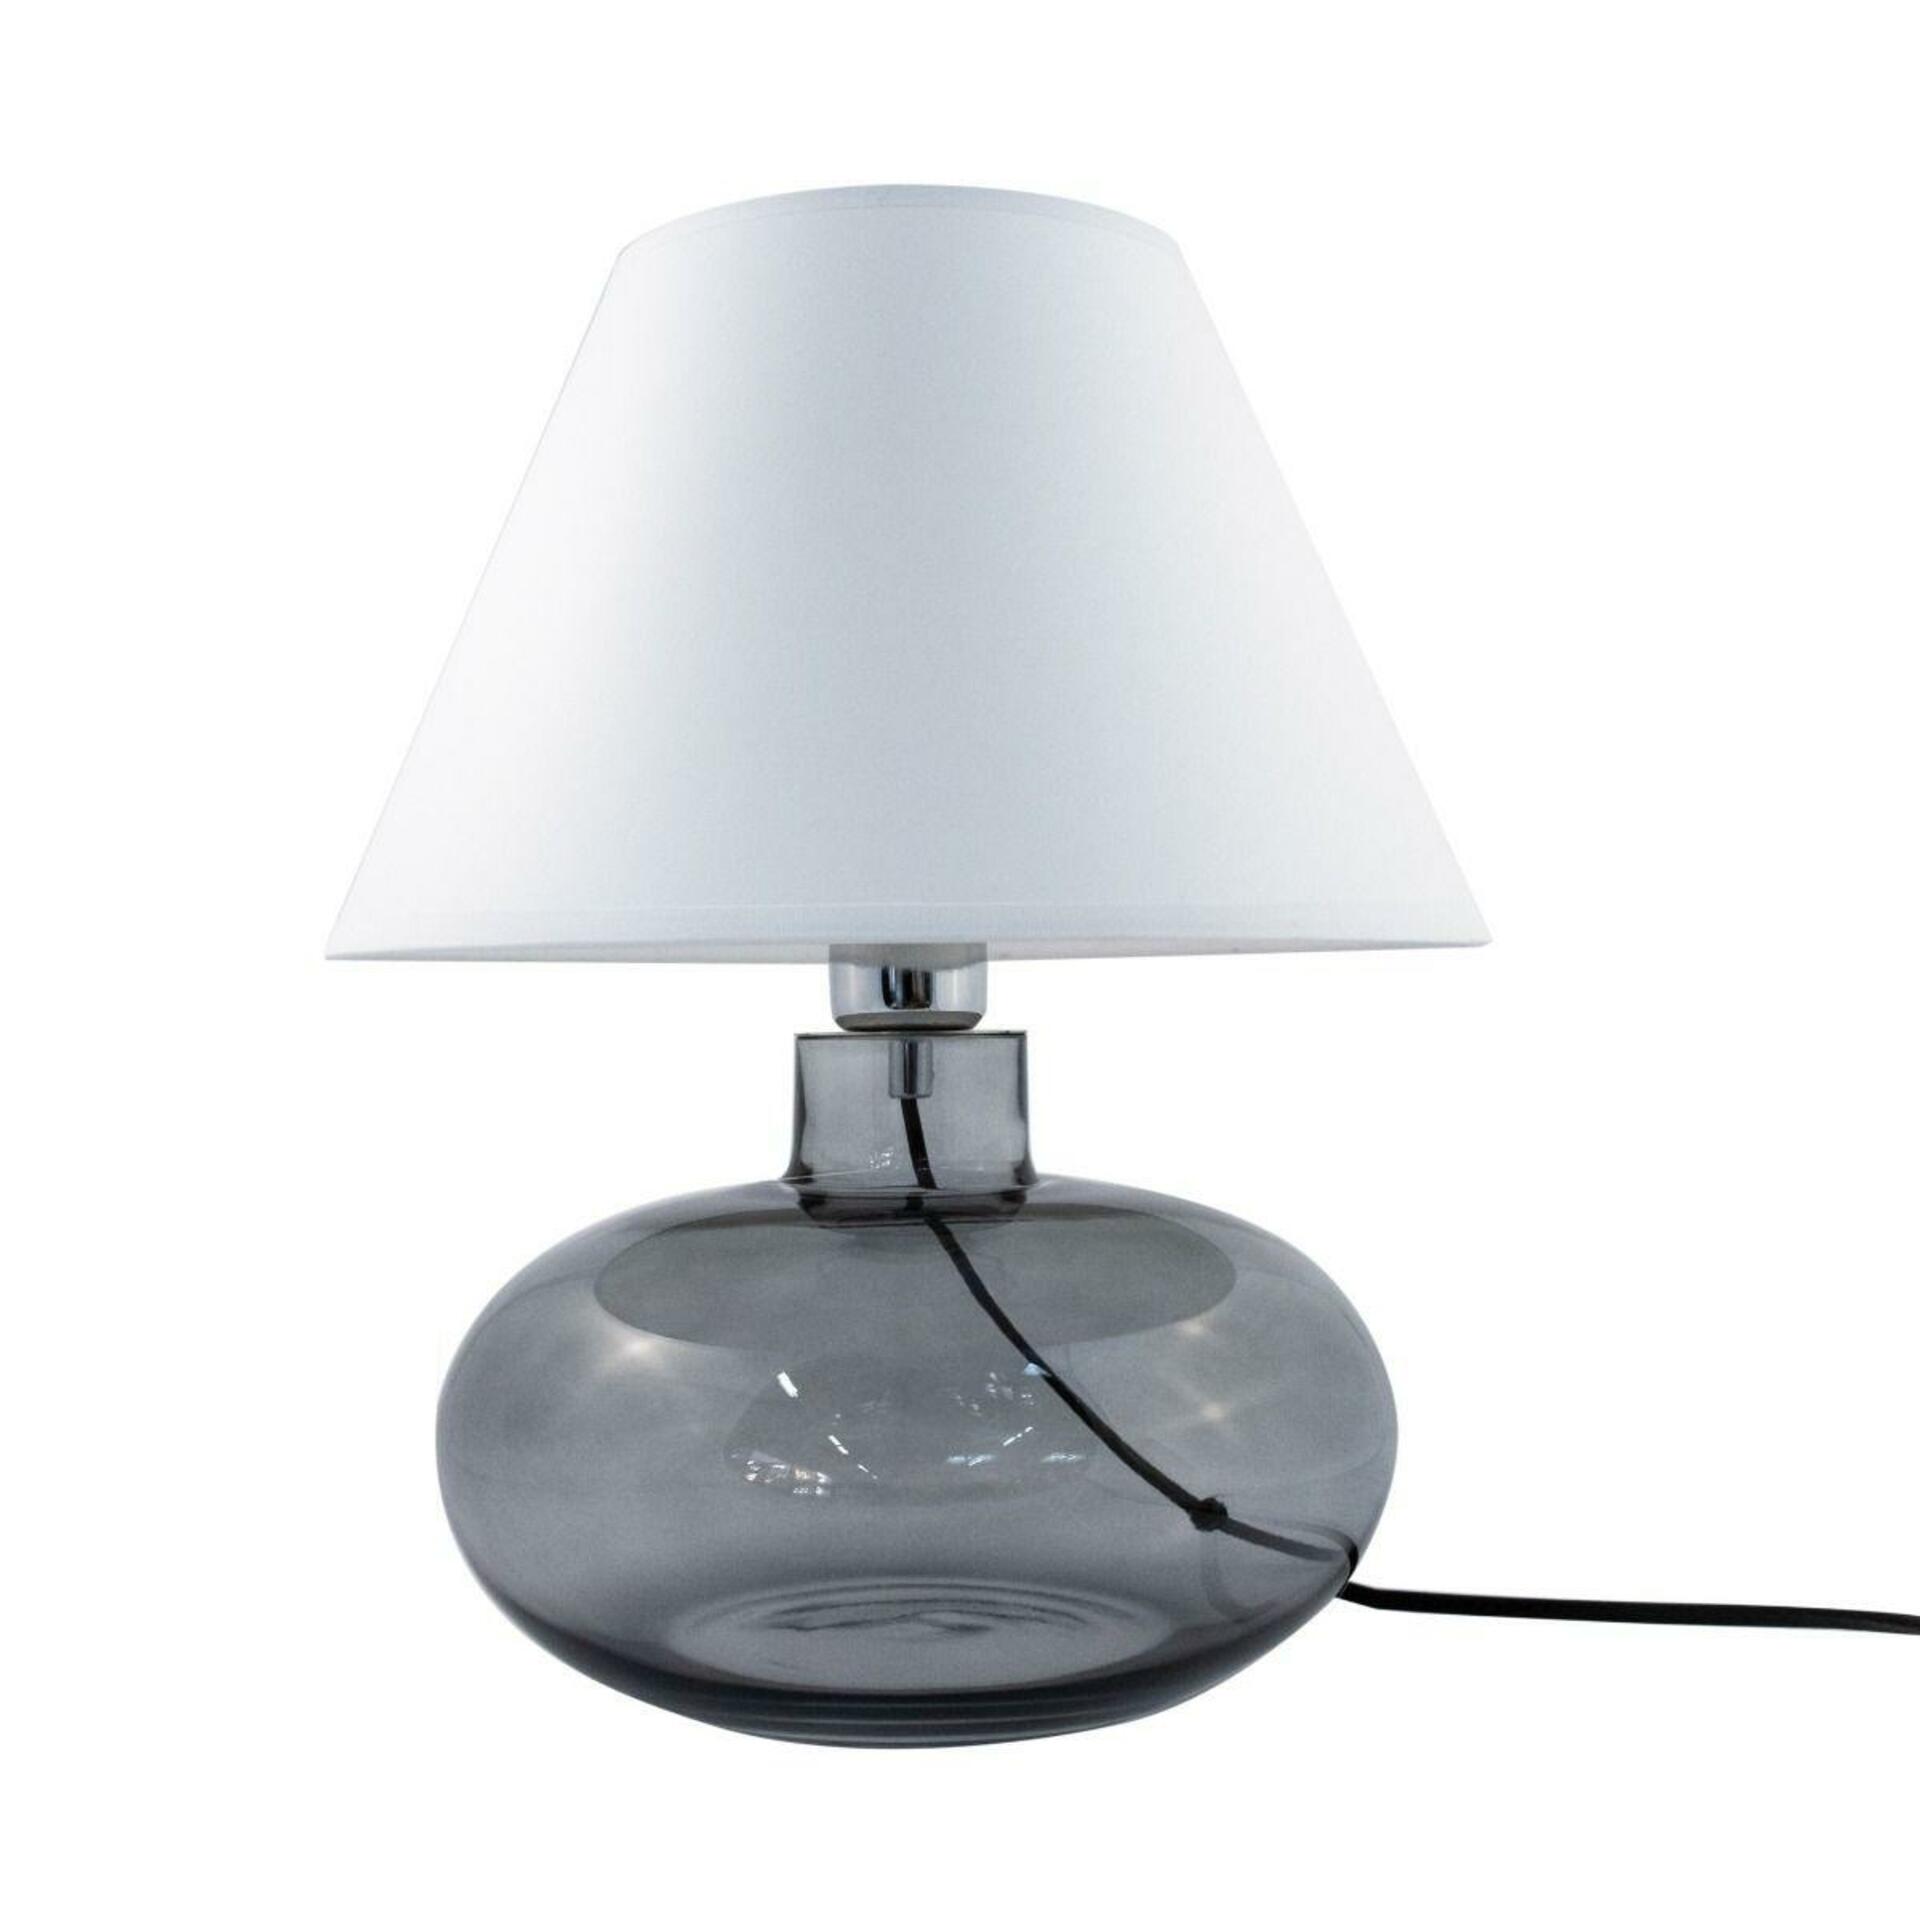 ZUMALINE Stolní lampa MERSIN GRAFIT 5515WH